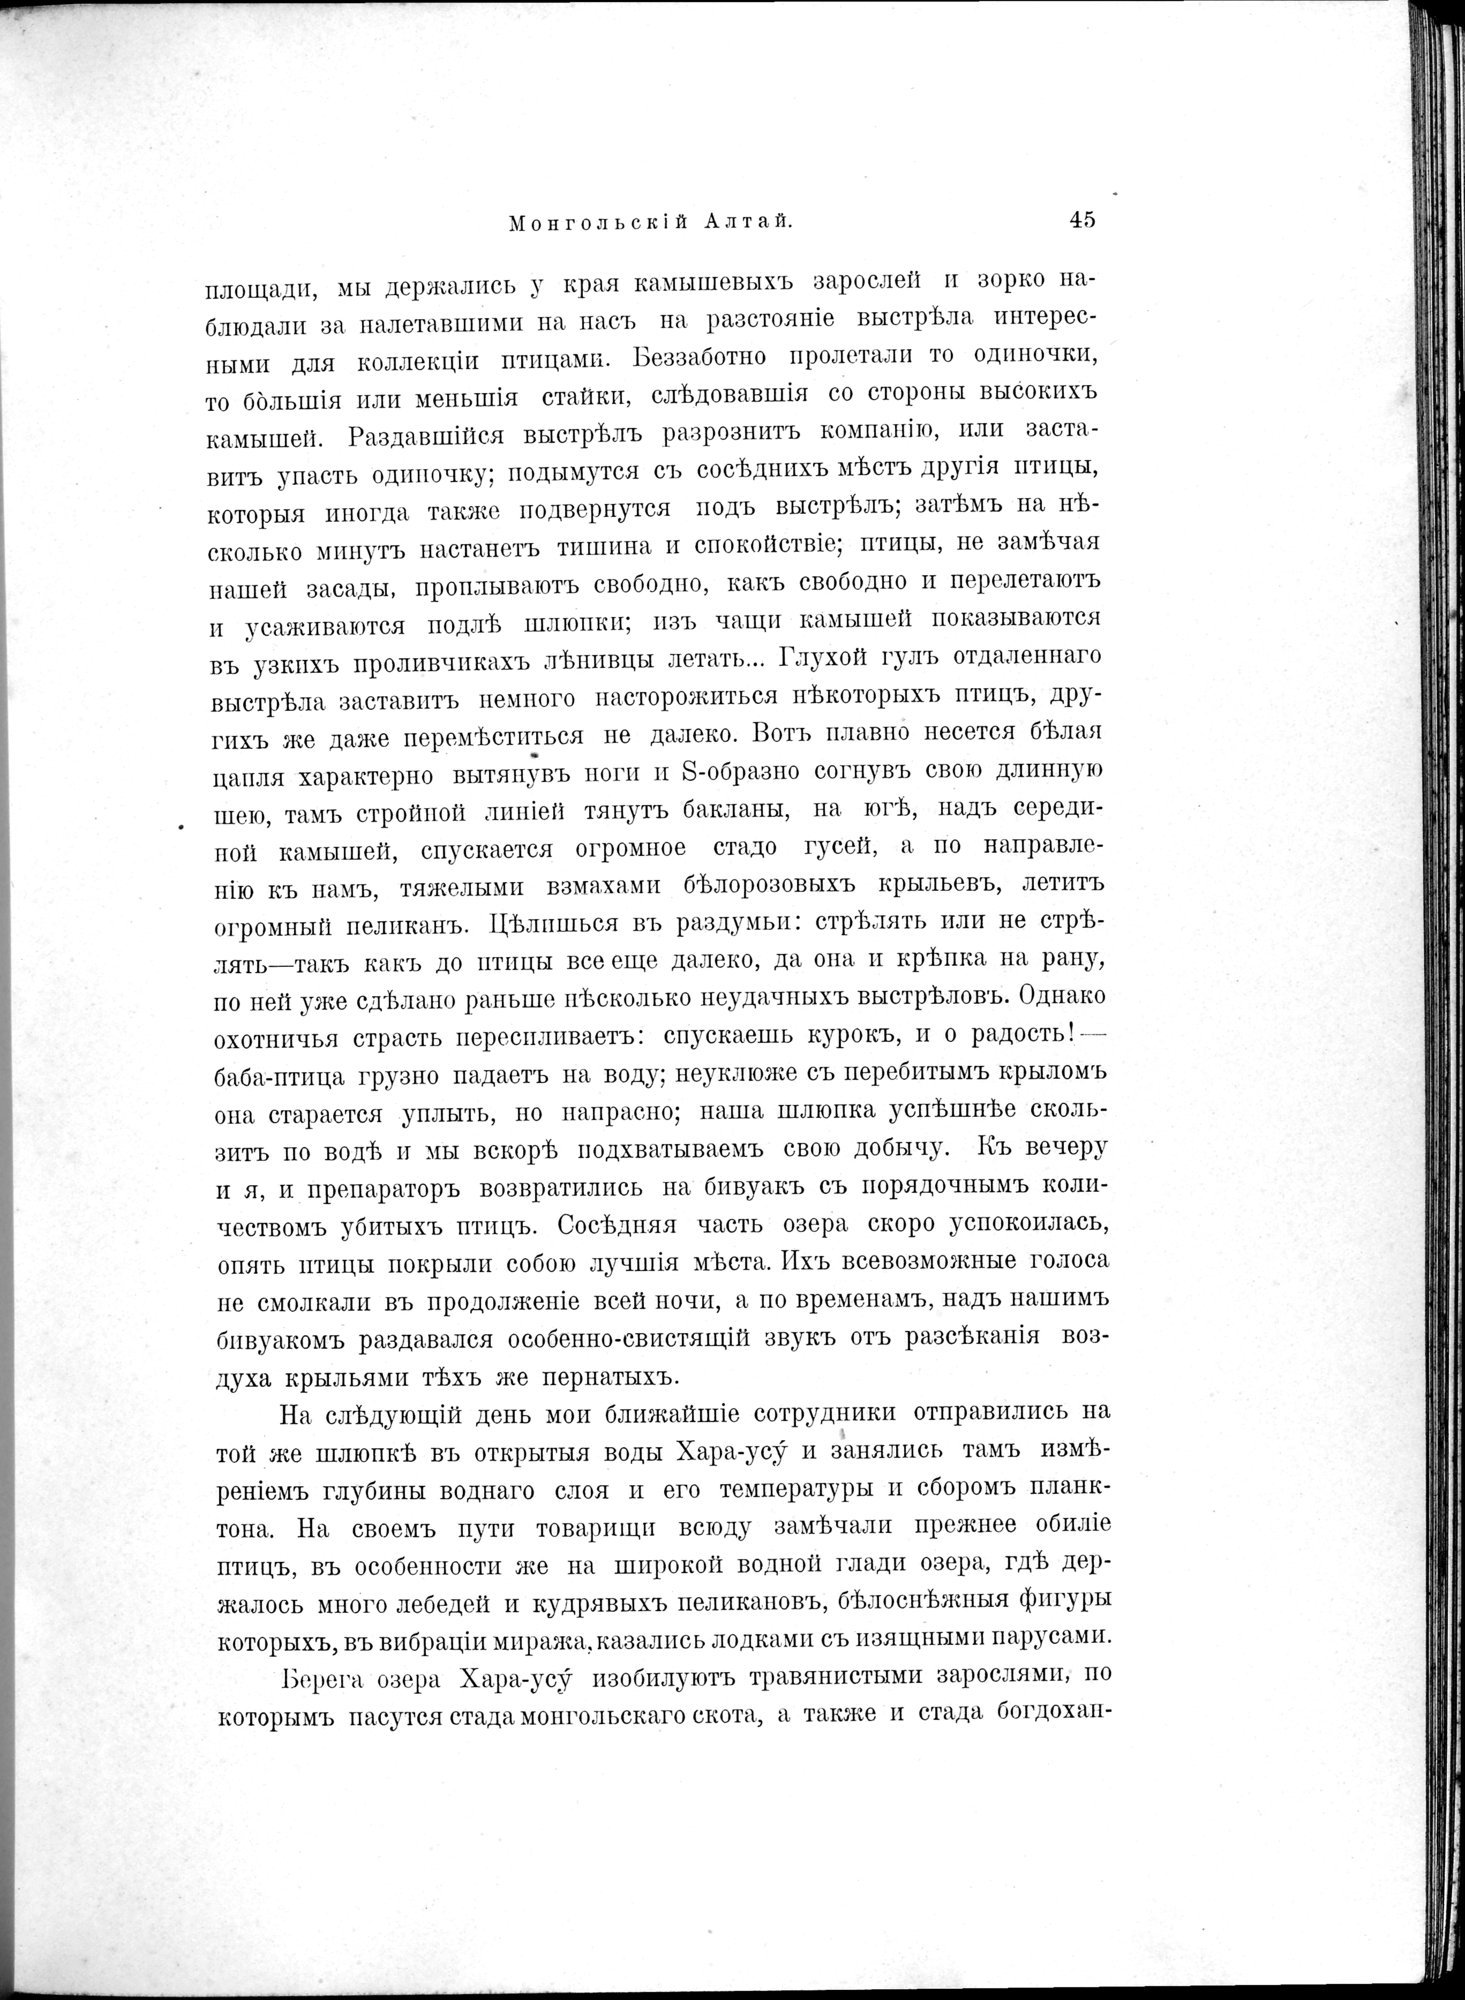 Mongoliia i Kam : vol.1 / Page 79 (Grayscale High Resolution Image)